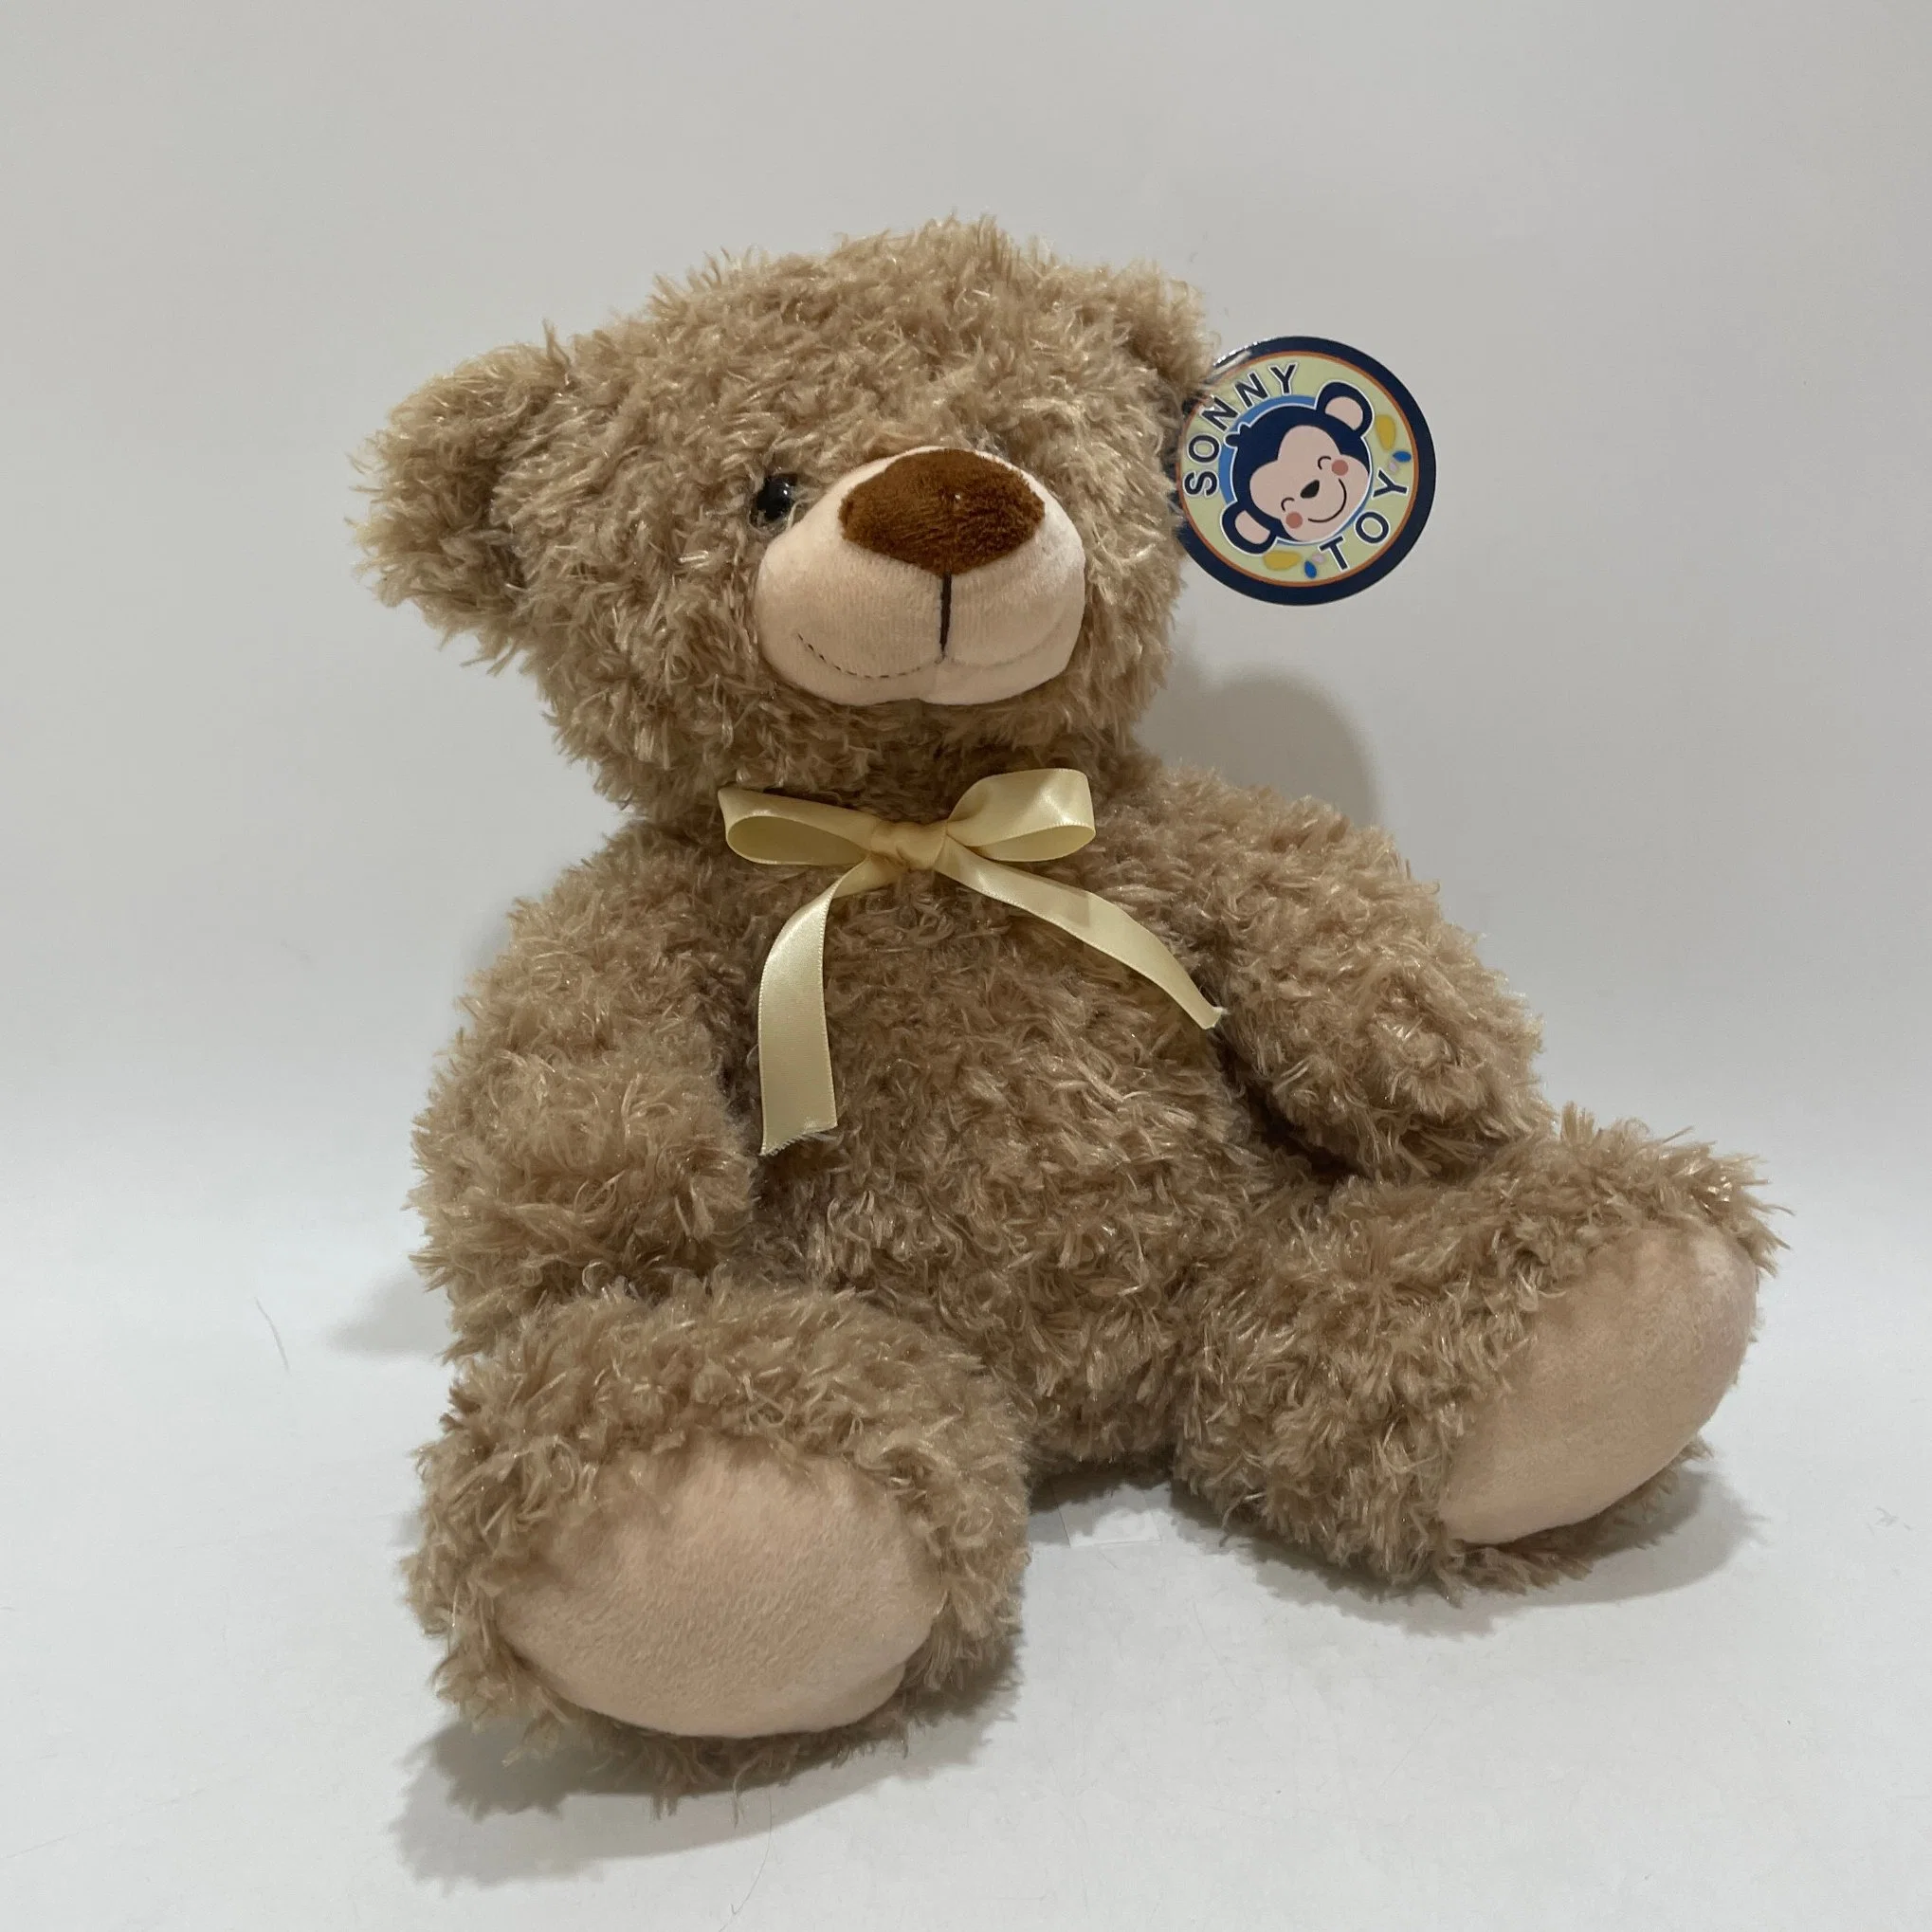 Lightning & Singing Stuffed Soft Plush Teddy Bear W/ Lullaby Songs & LED Lights for Baby